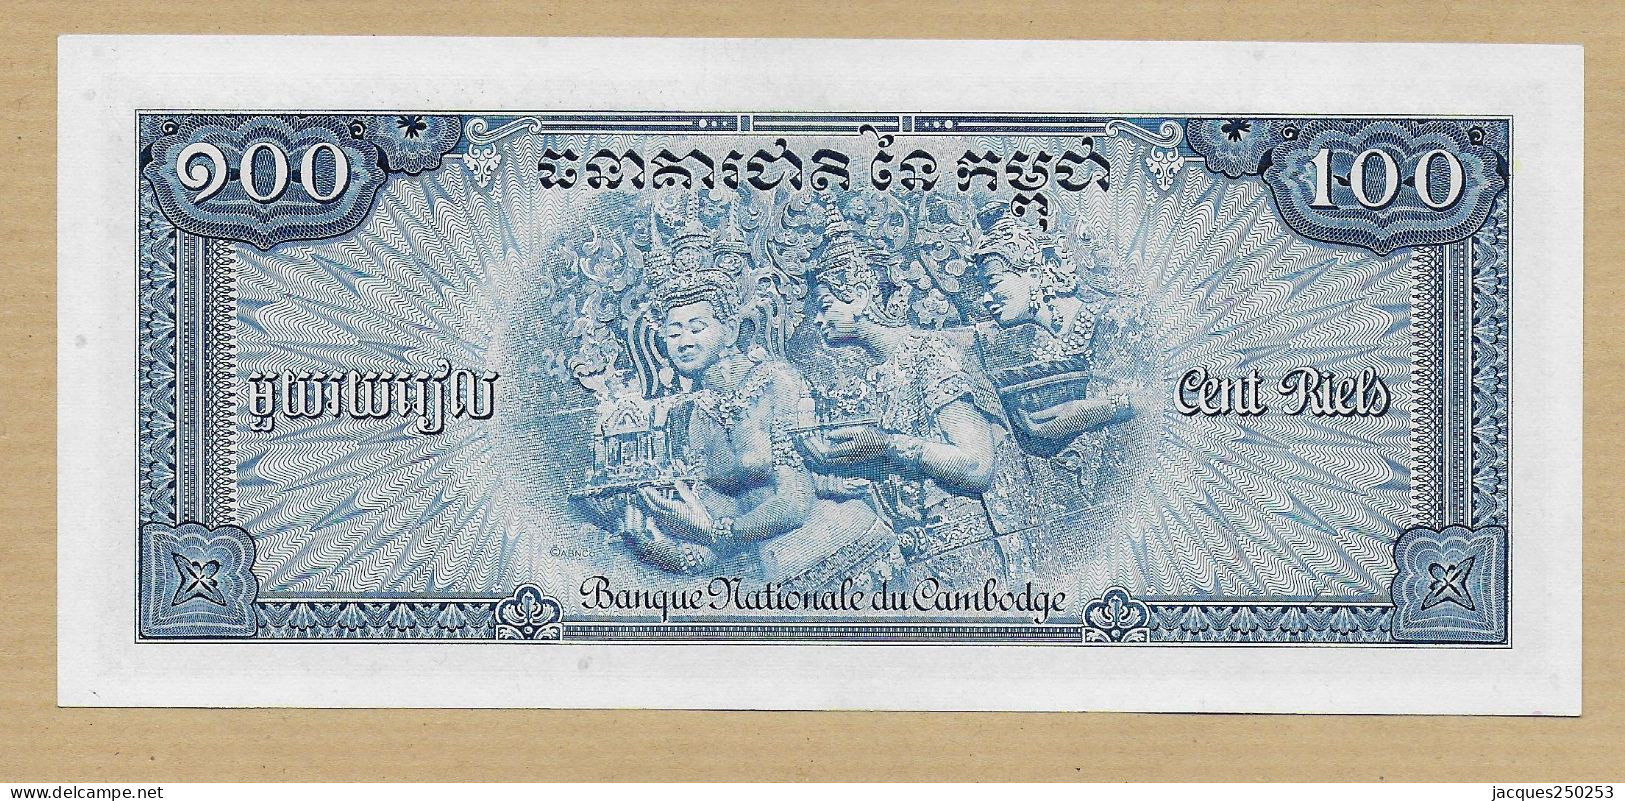 100 RIELS 1972 NEUF - Cambodia